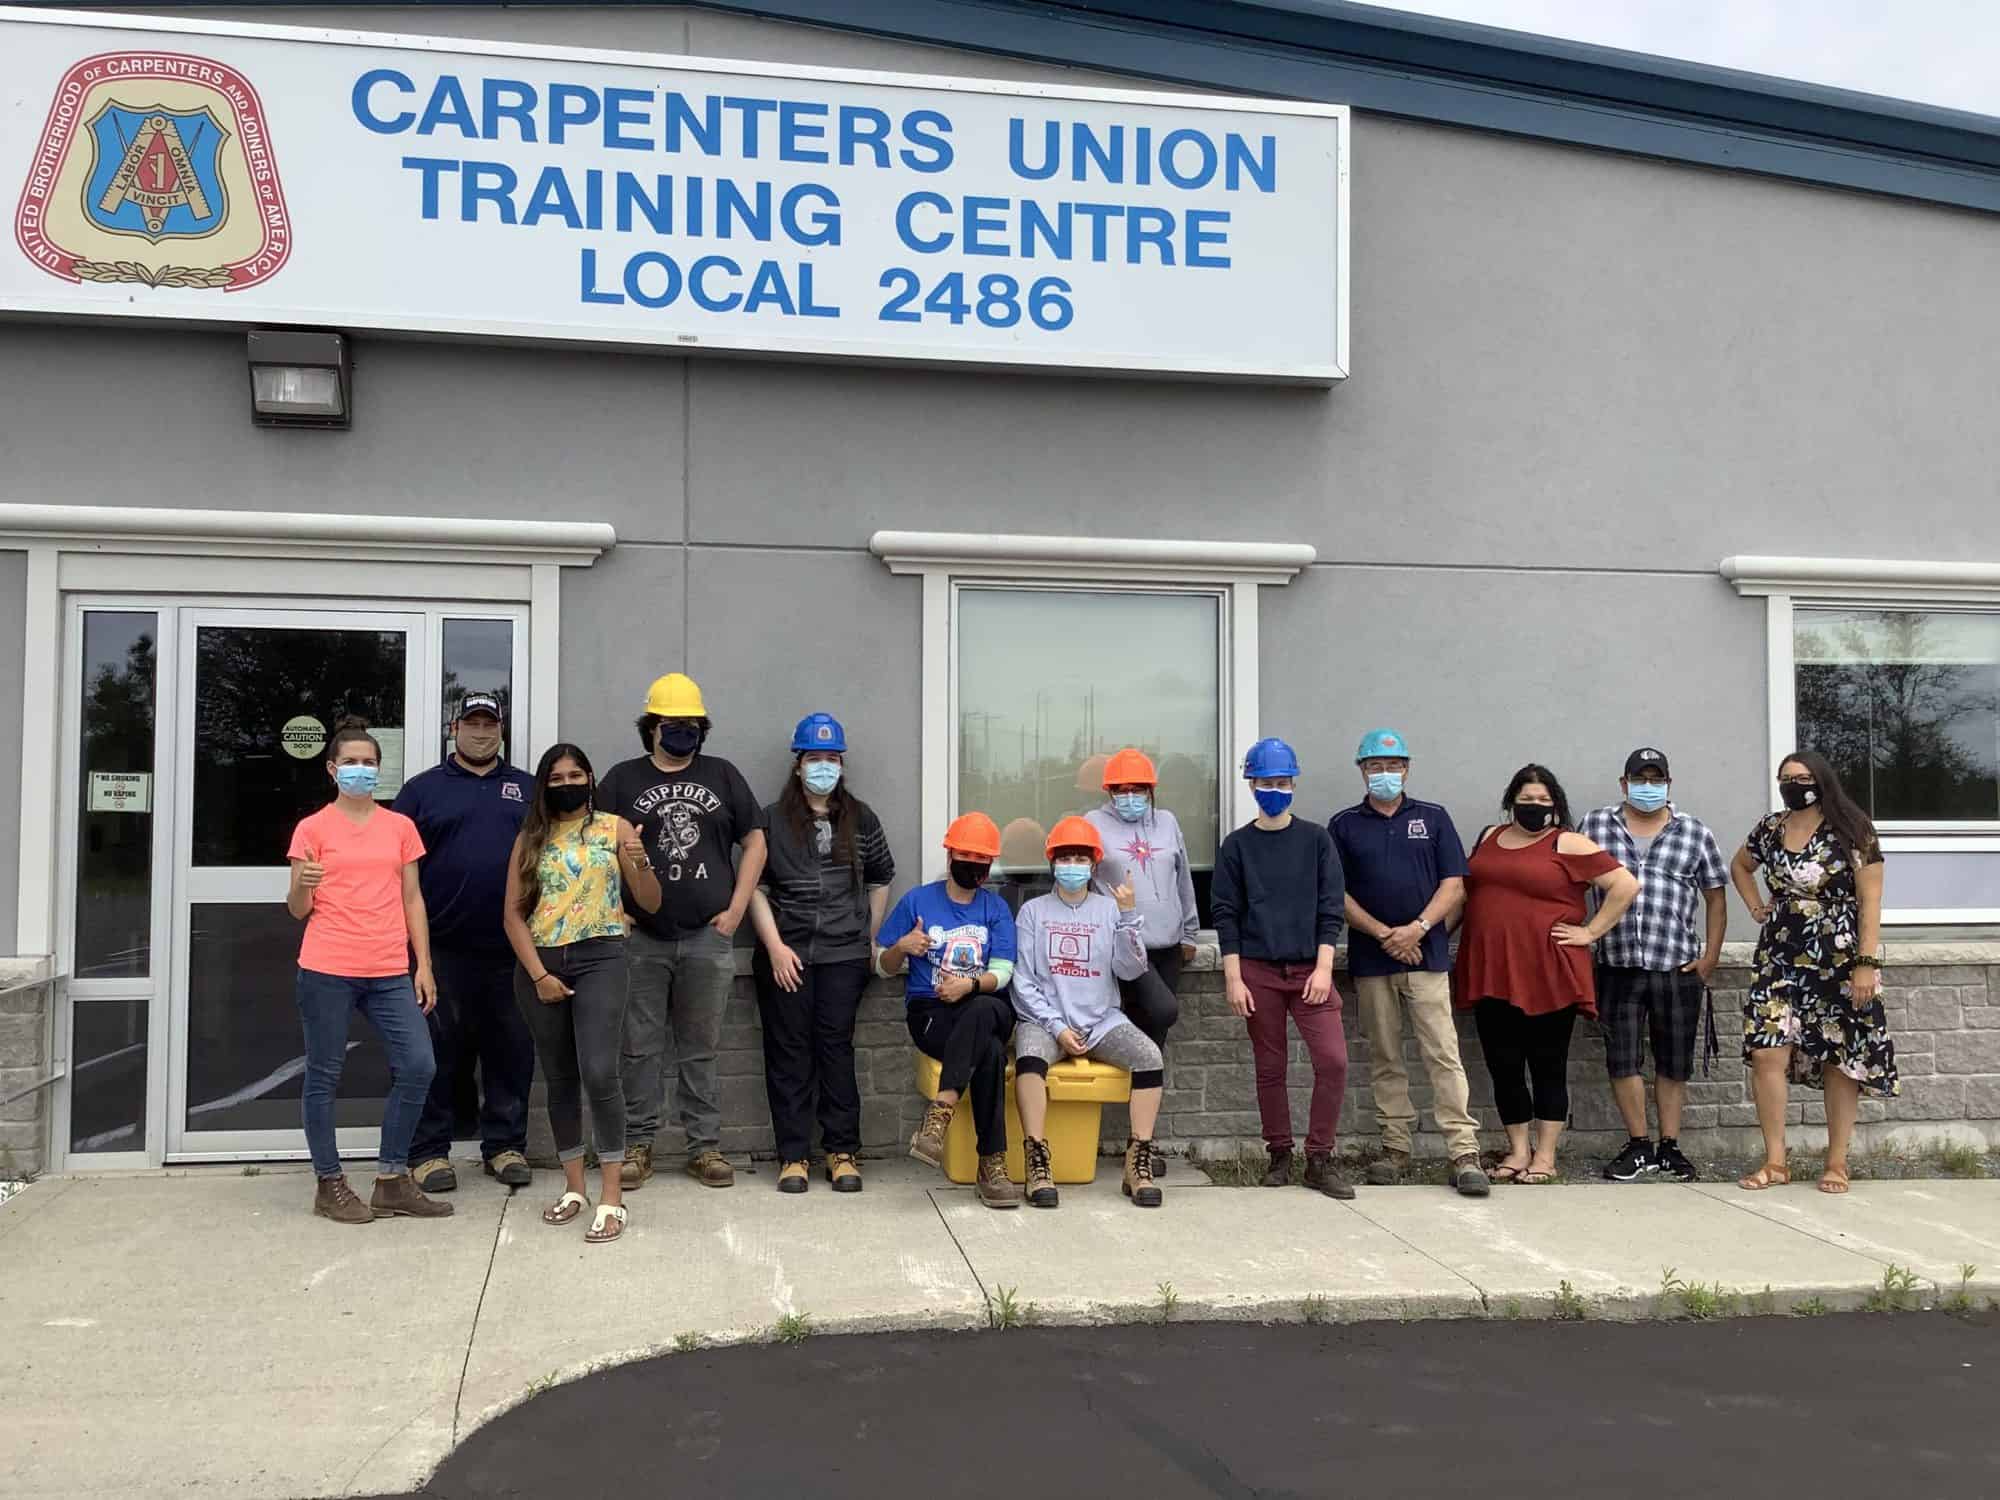 Carpenters Union Training Centre Group Photo